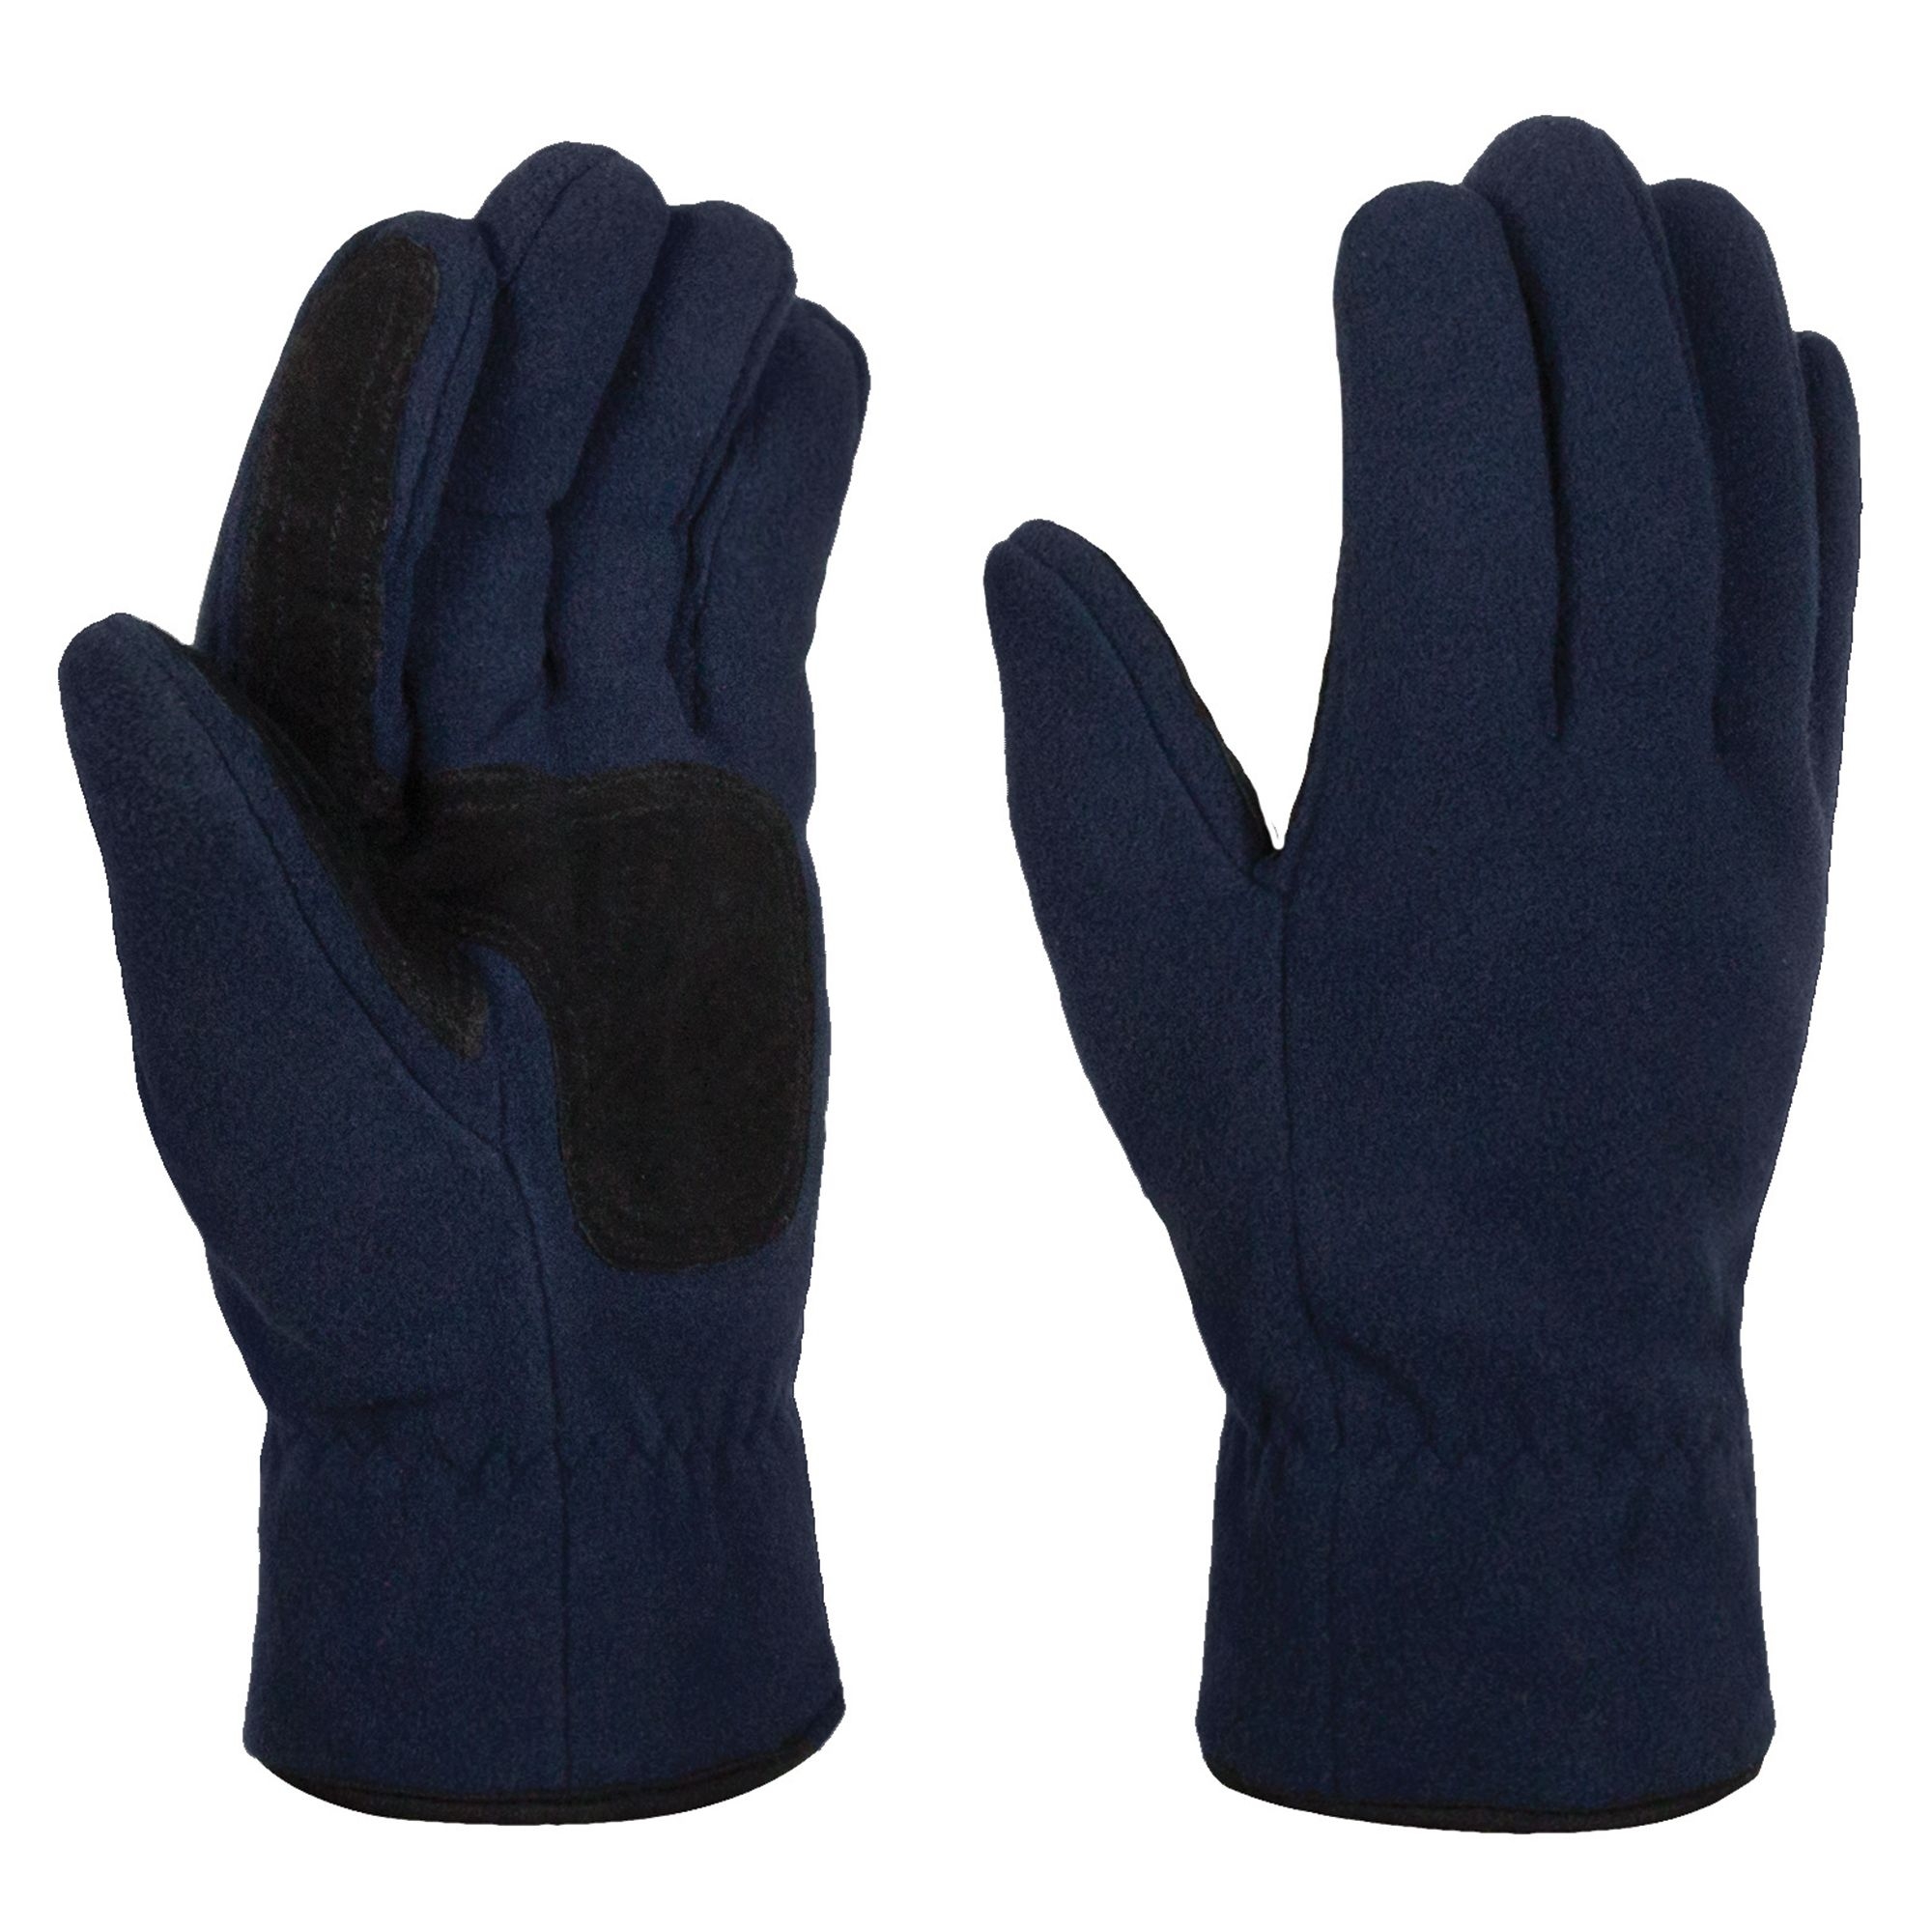 Regatta Thinsulate Fleece Gloves - Navy - L/xl